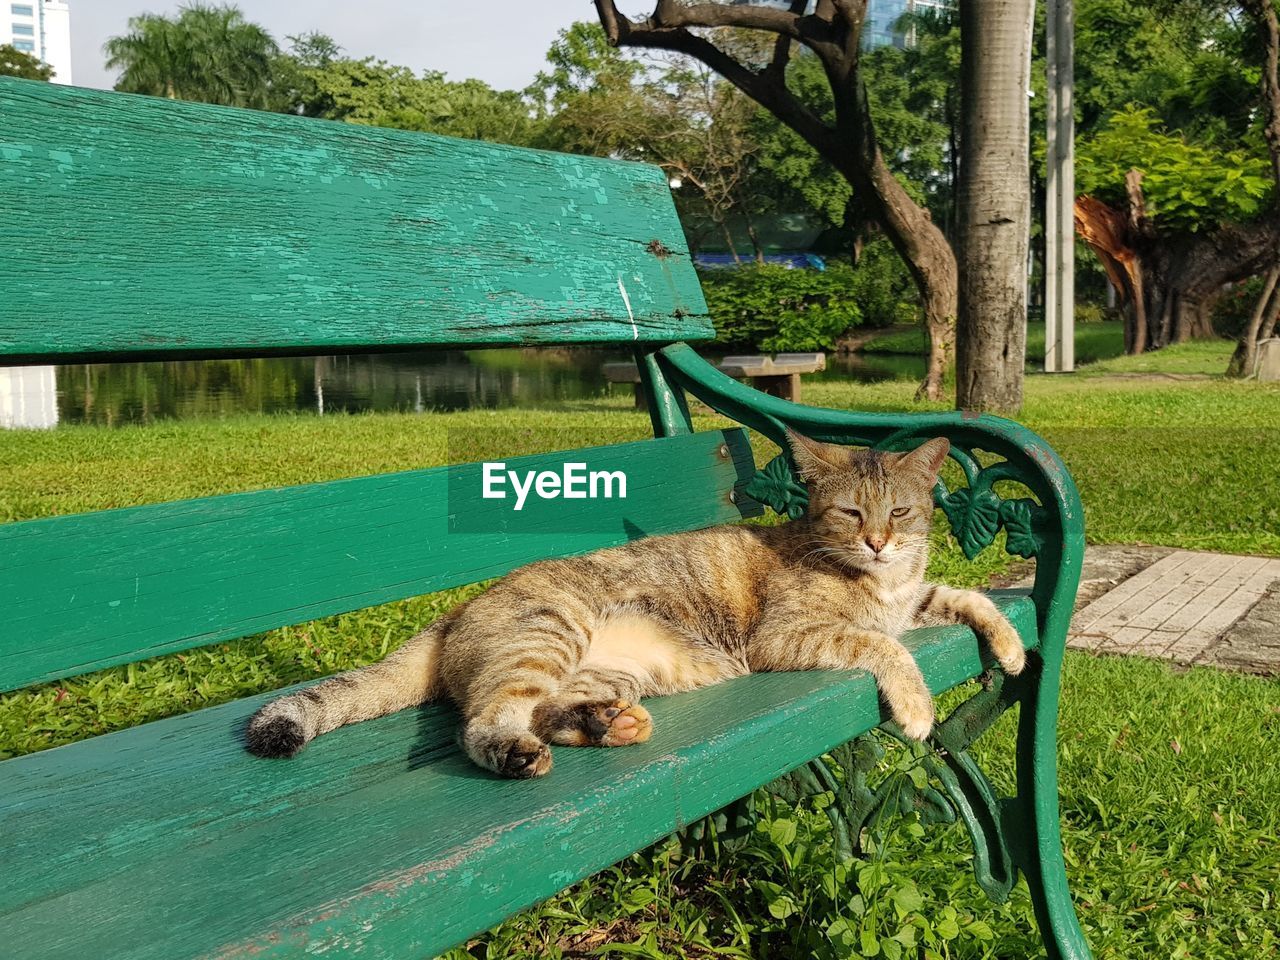 CAT LYING ON A PARK